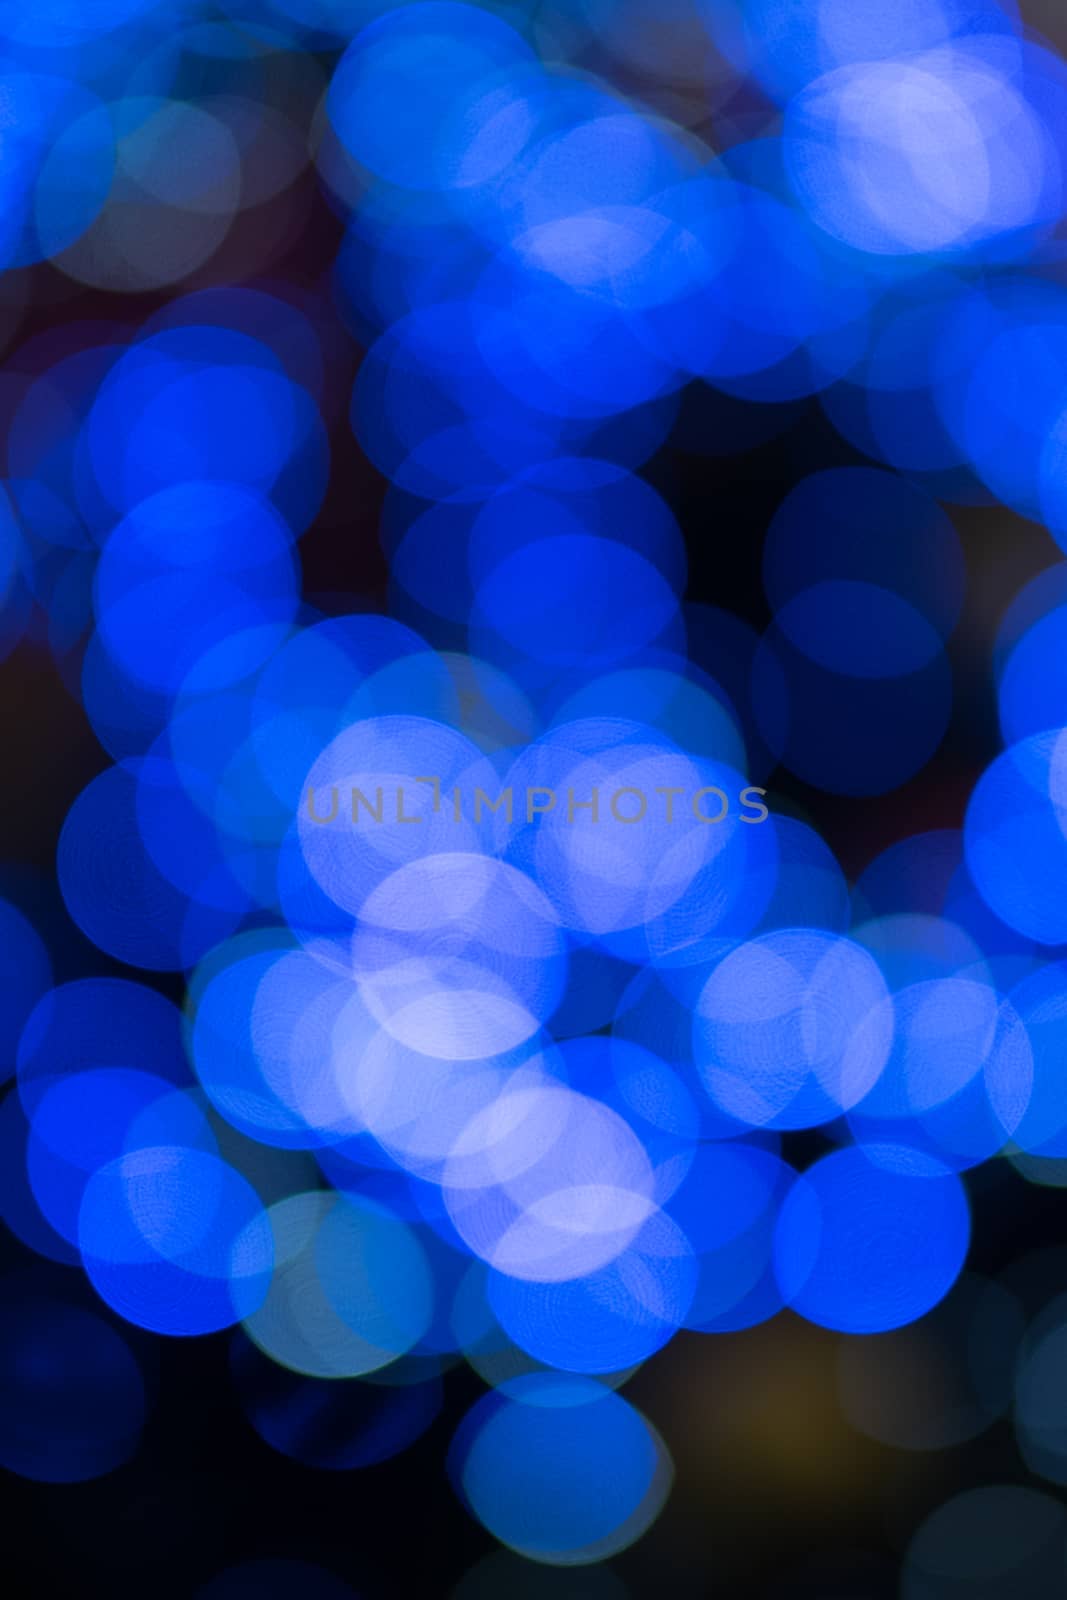 blurred blue light